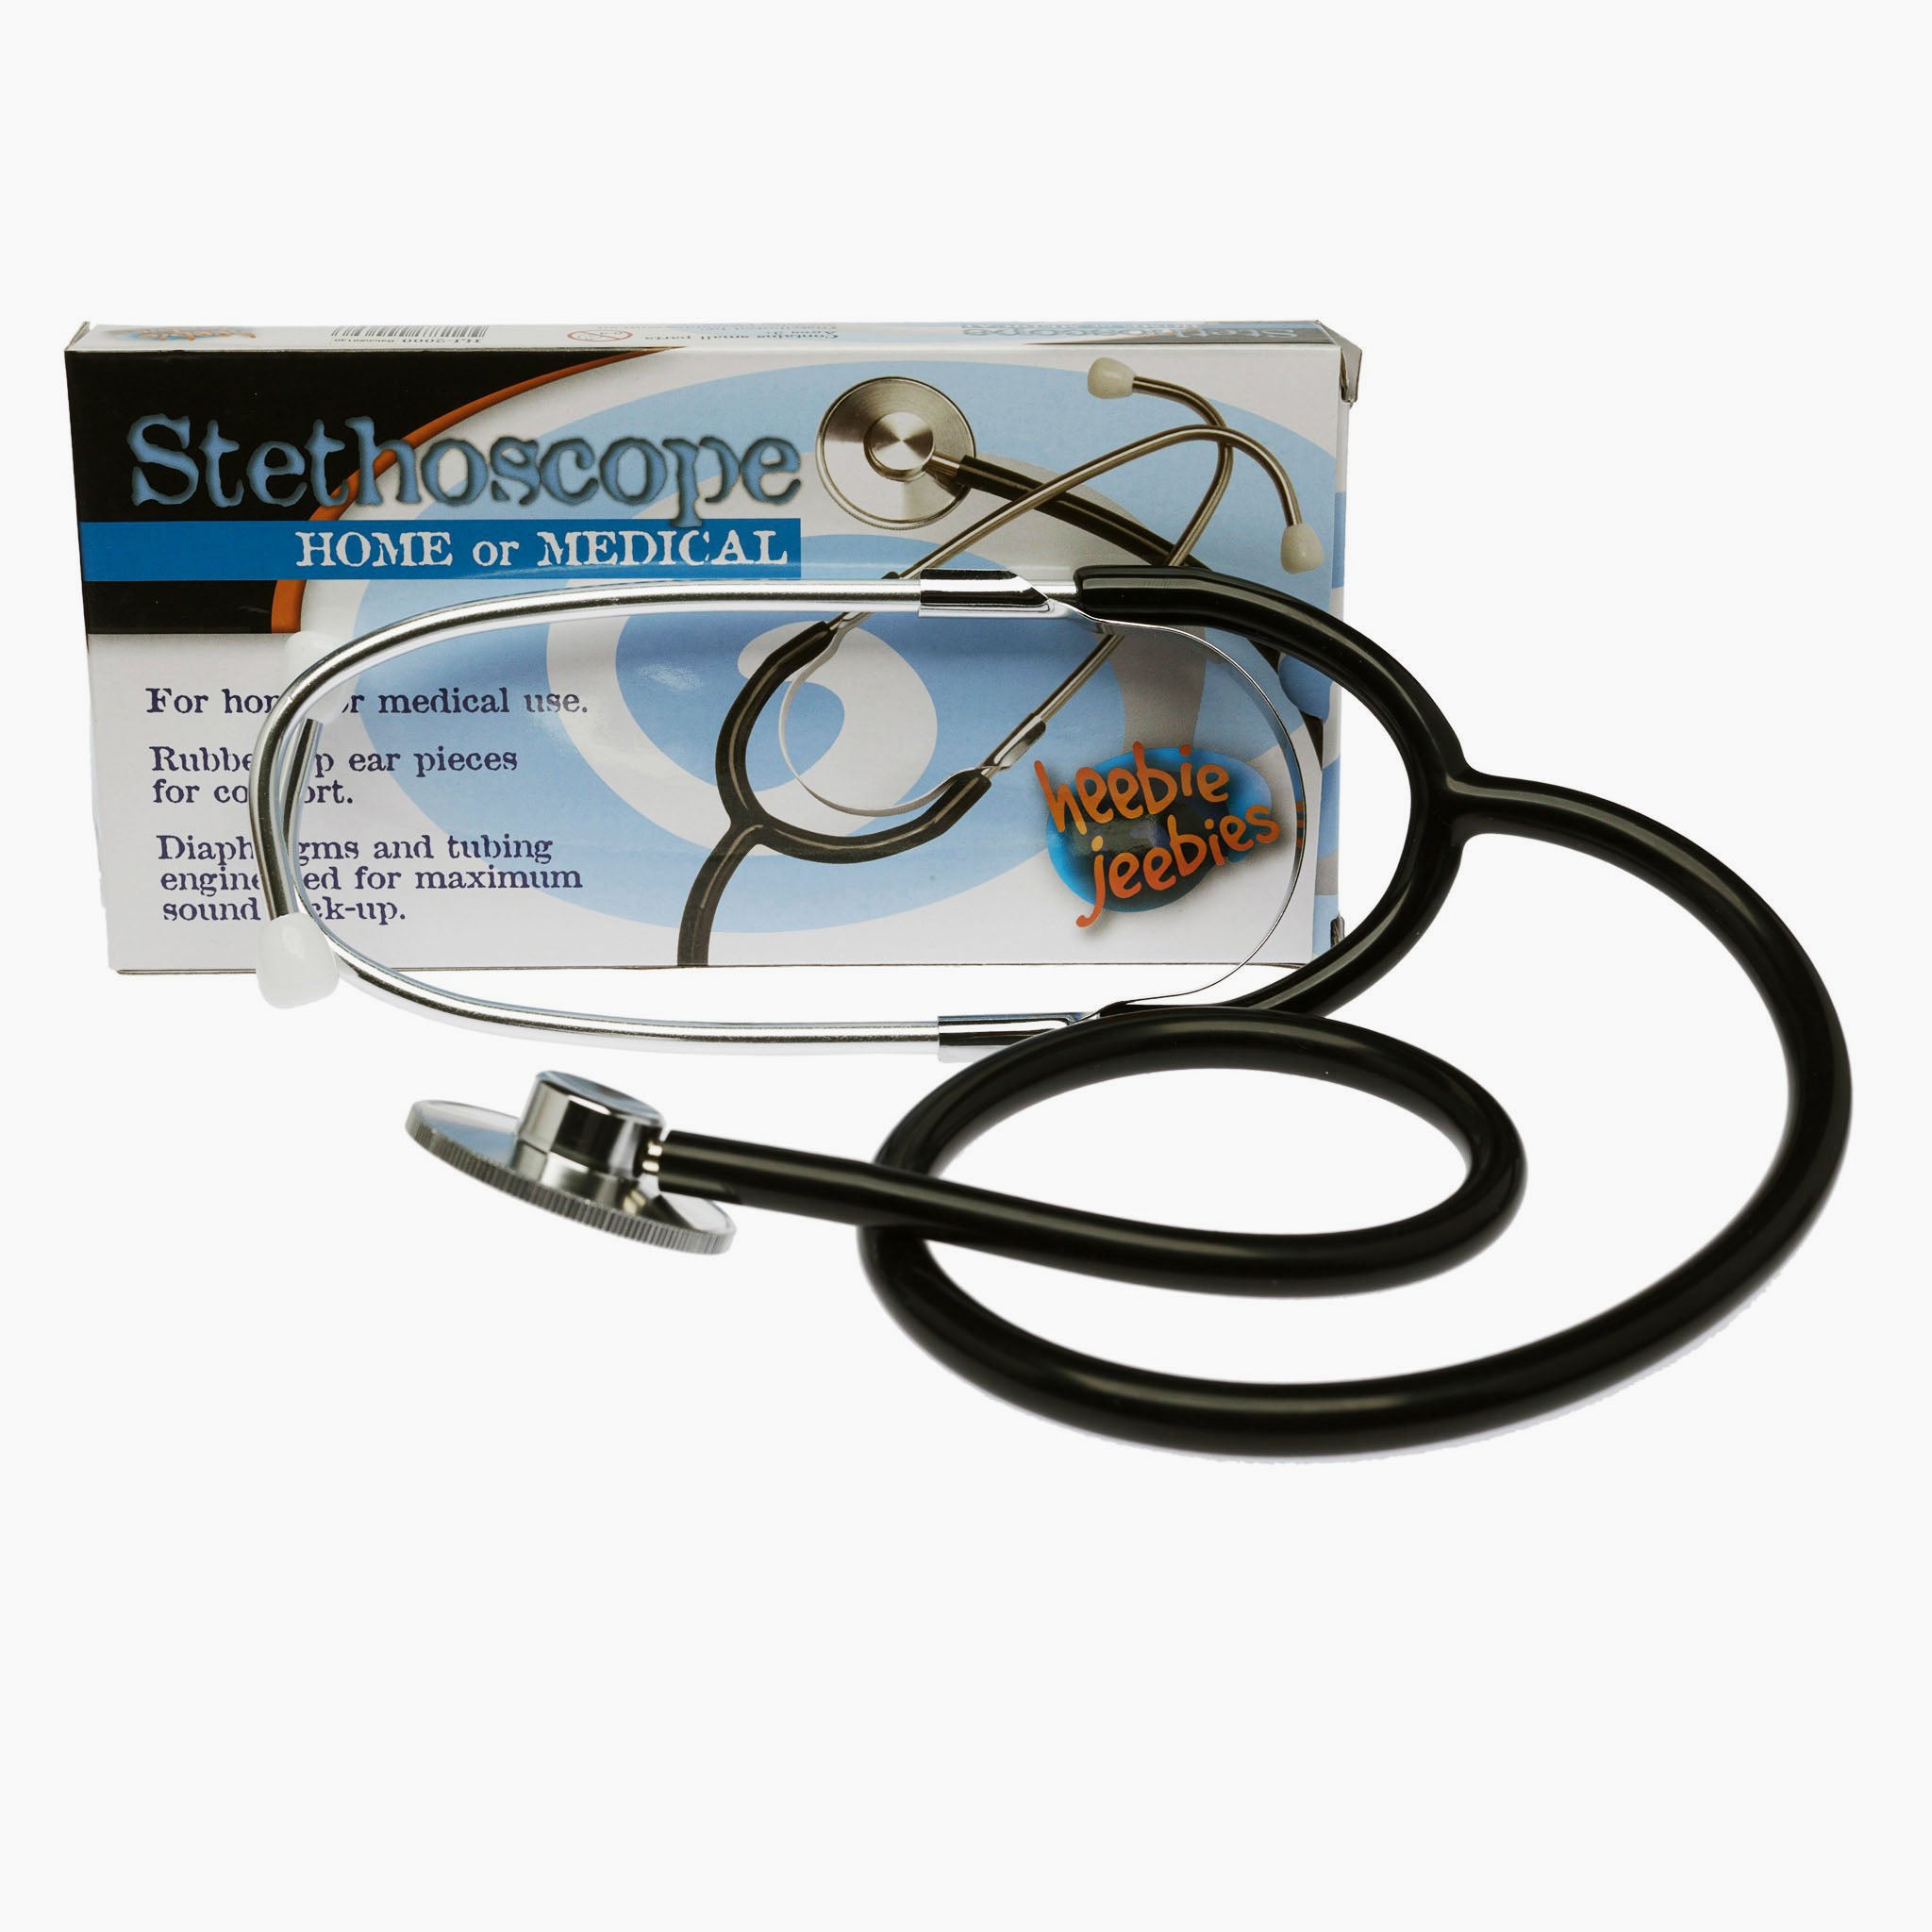 Stethoscope2.jpg